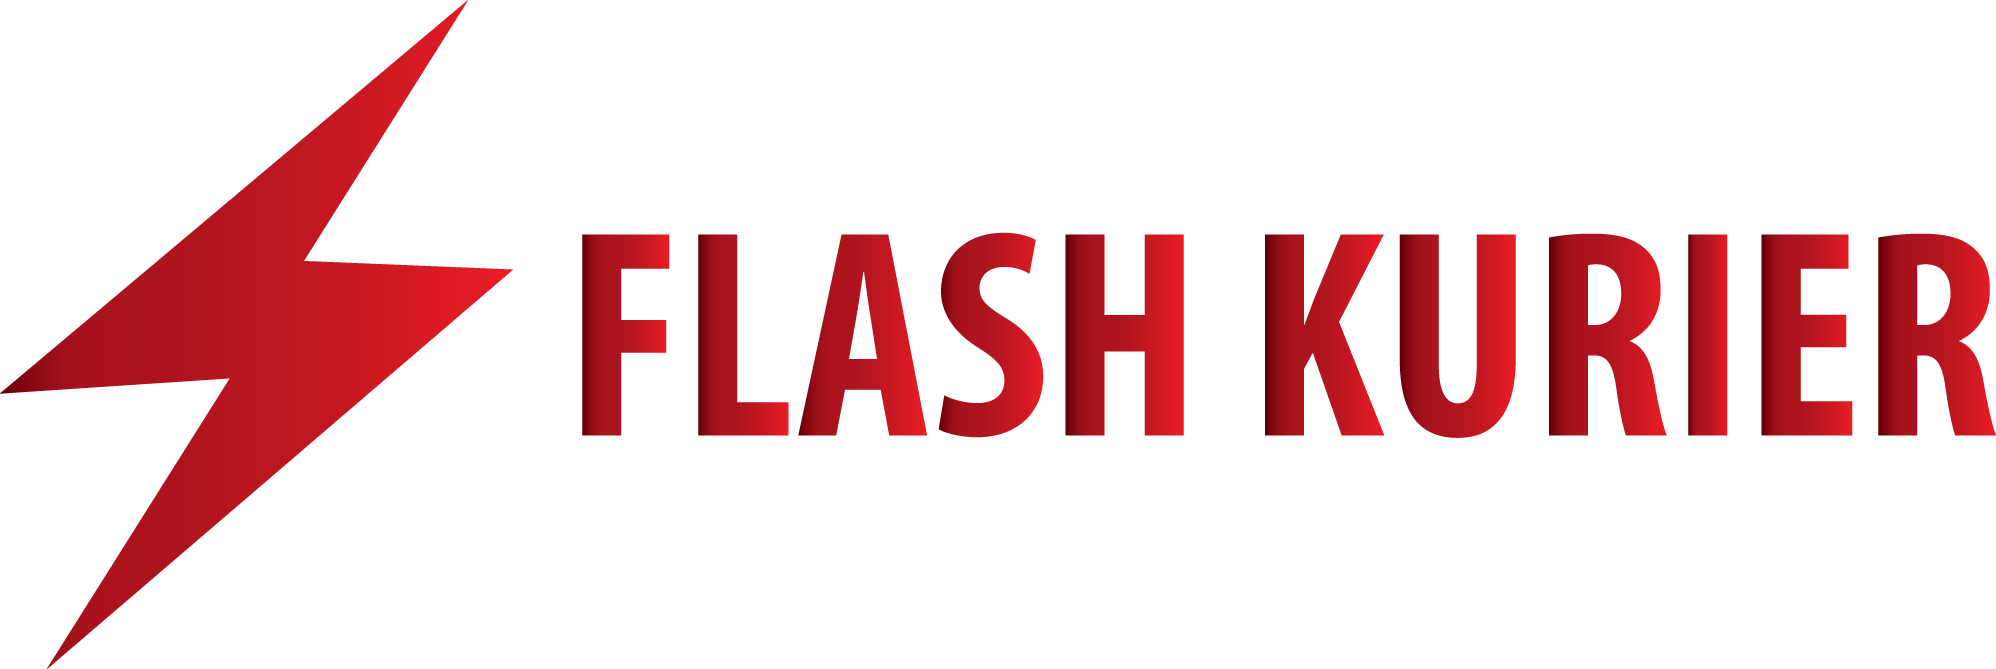 Flash kurier logo